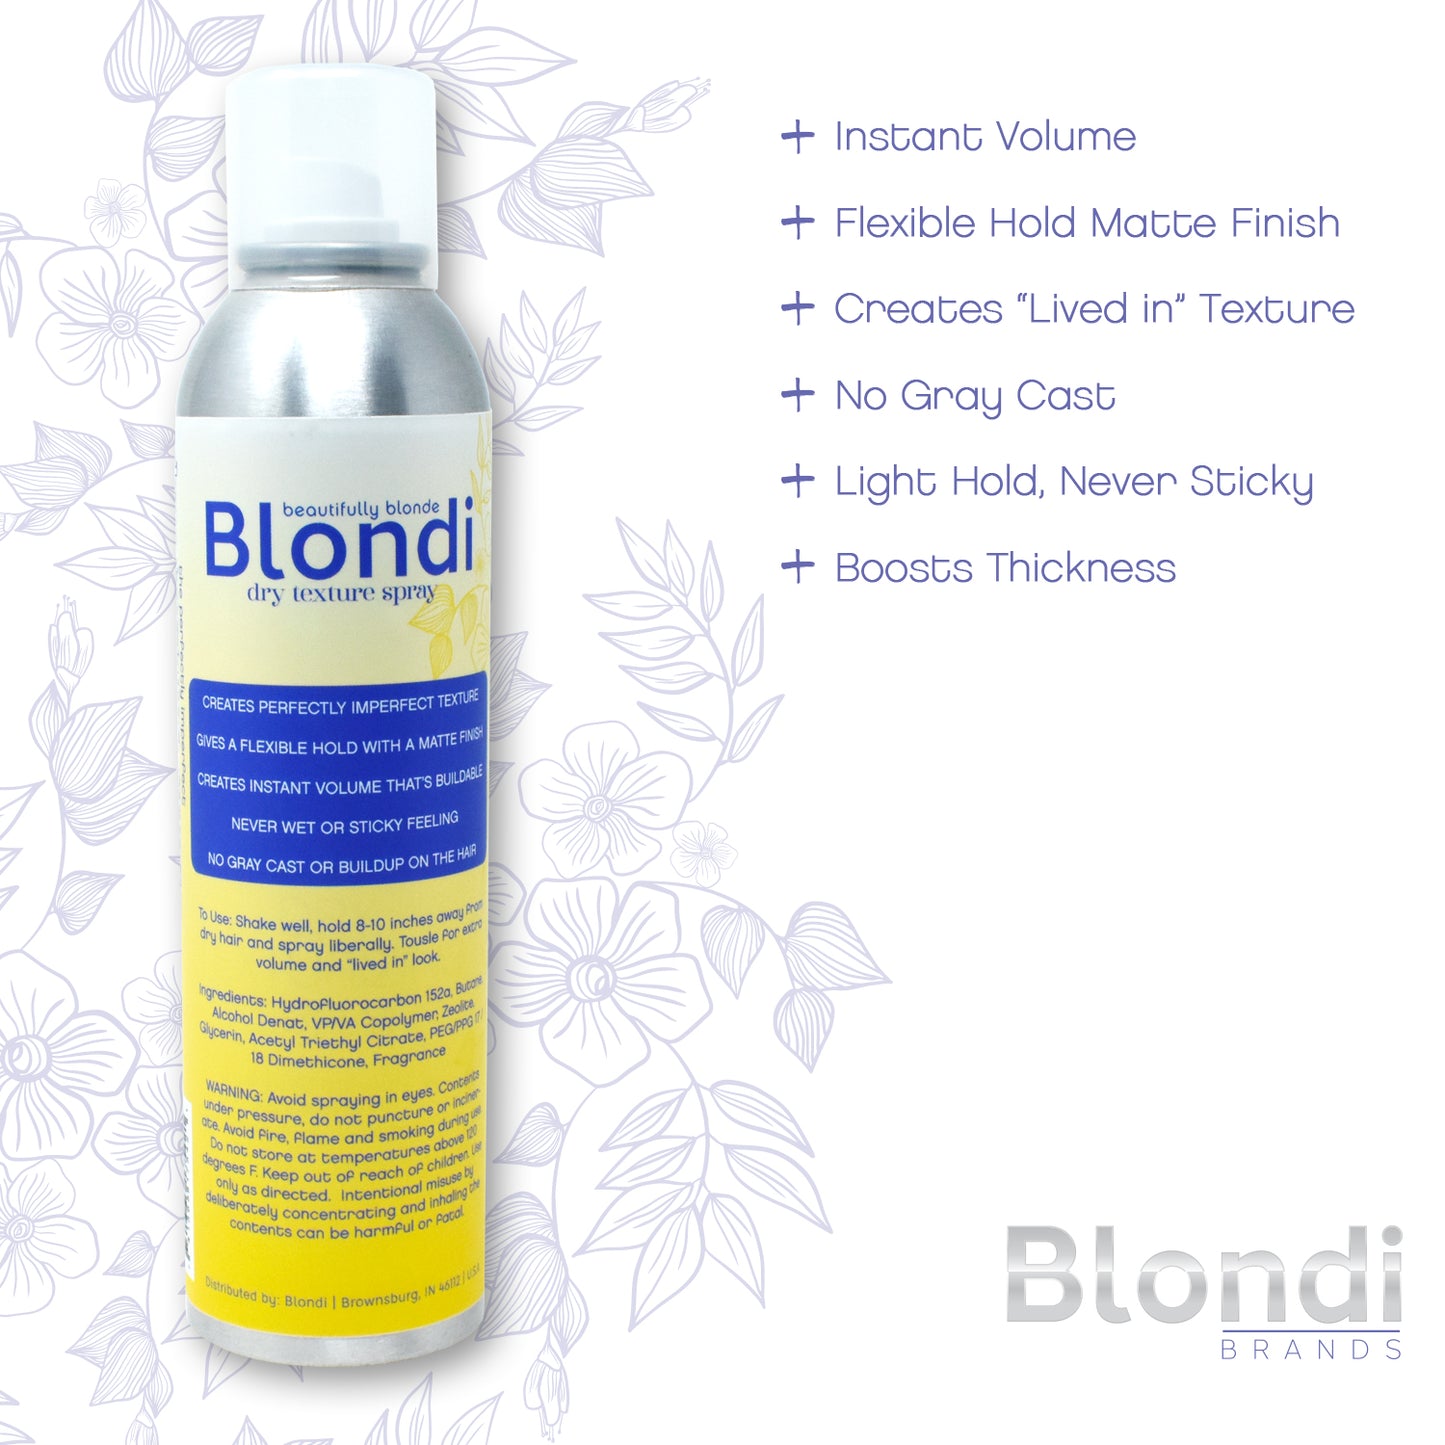 Blondi Beautifully Blonde Dry Texture Spray